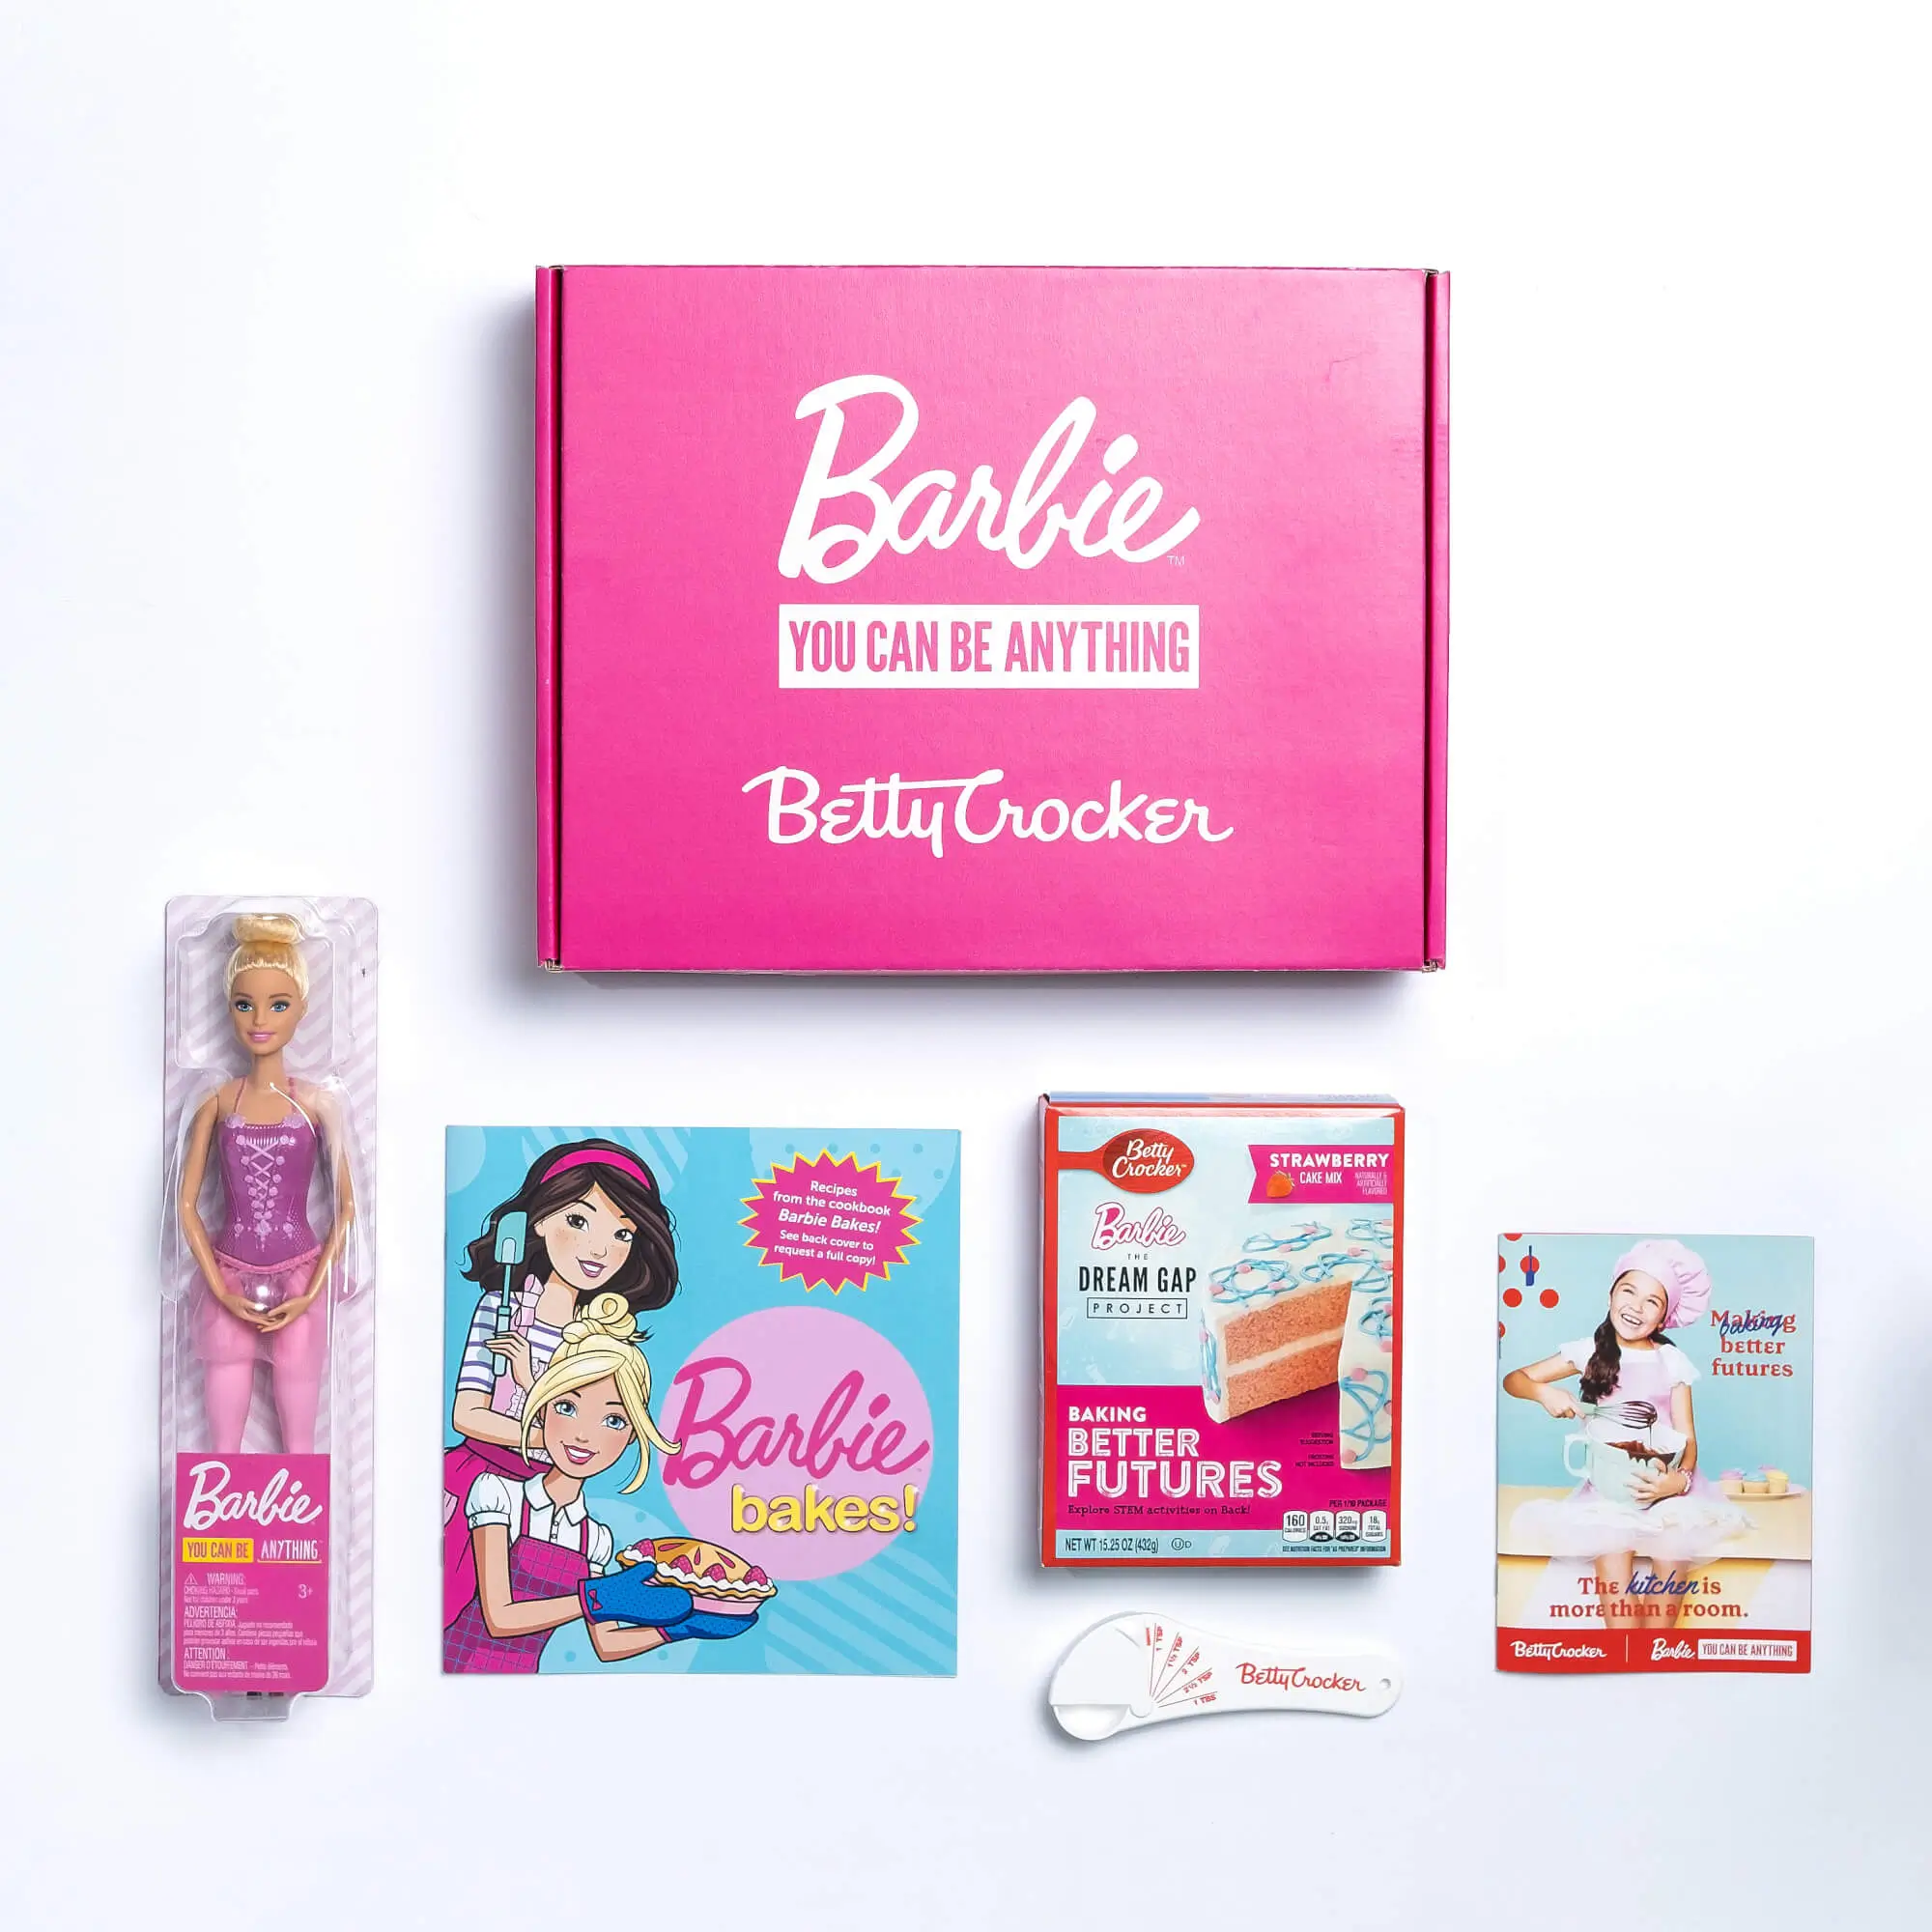 Betty Crocker Barbie baking sample box components